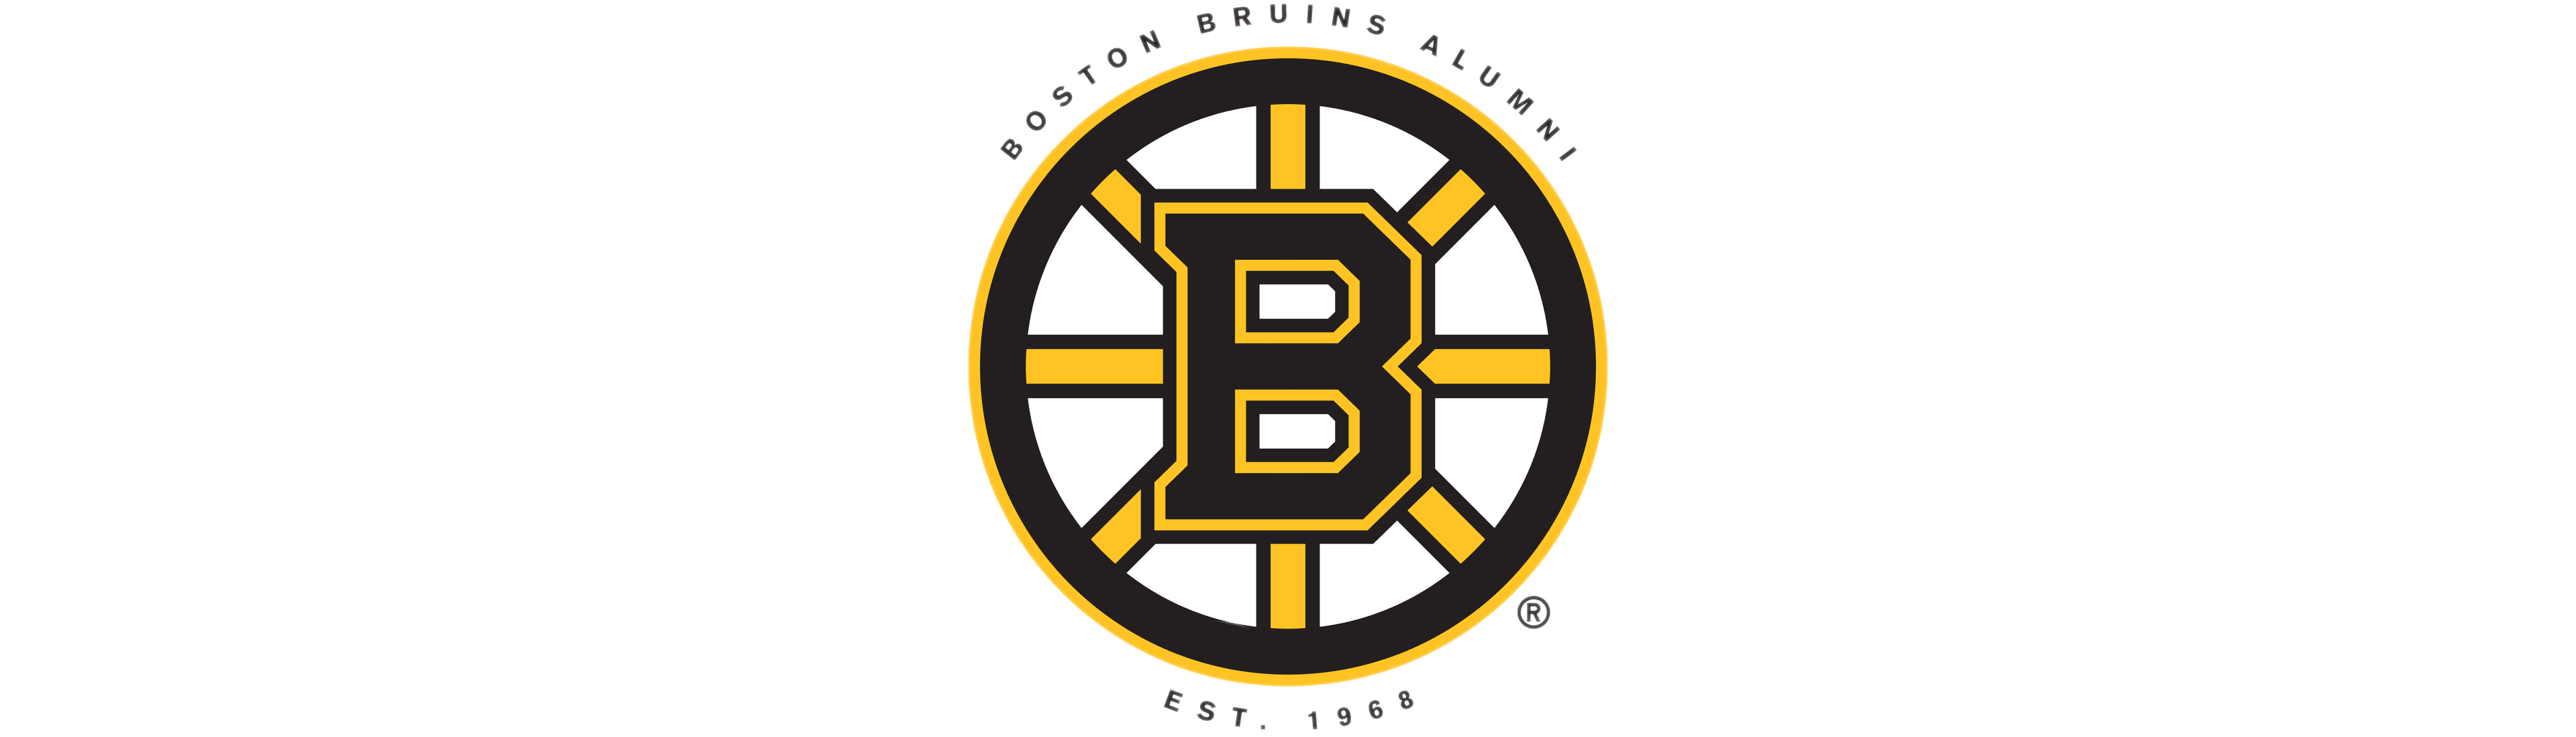 Boston Bruins Alumni vs. Melrose Youth Hockey logo image